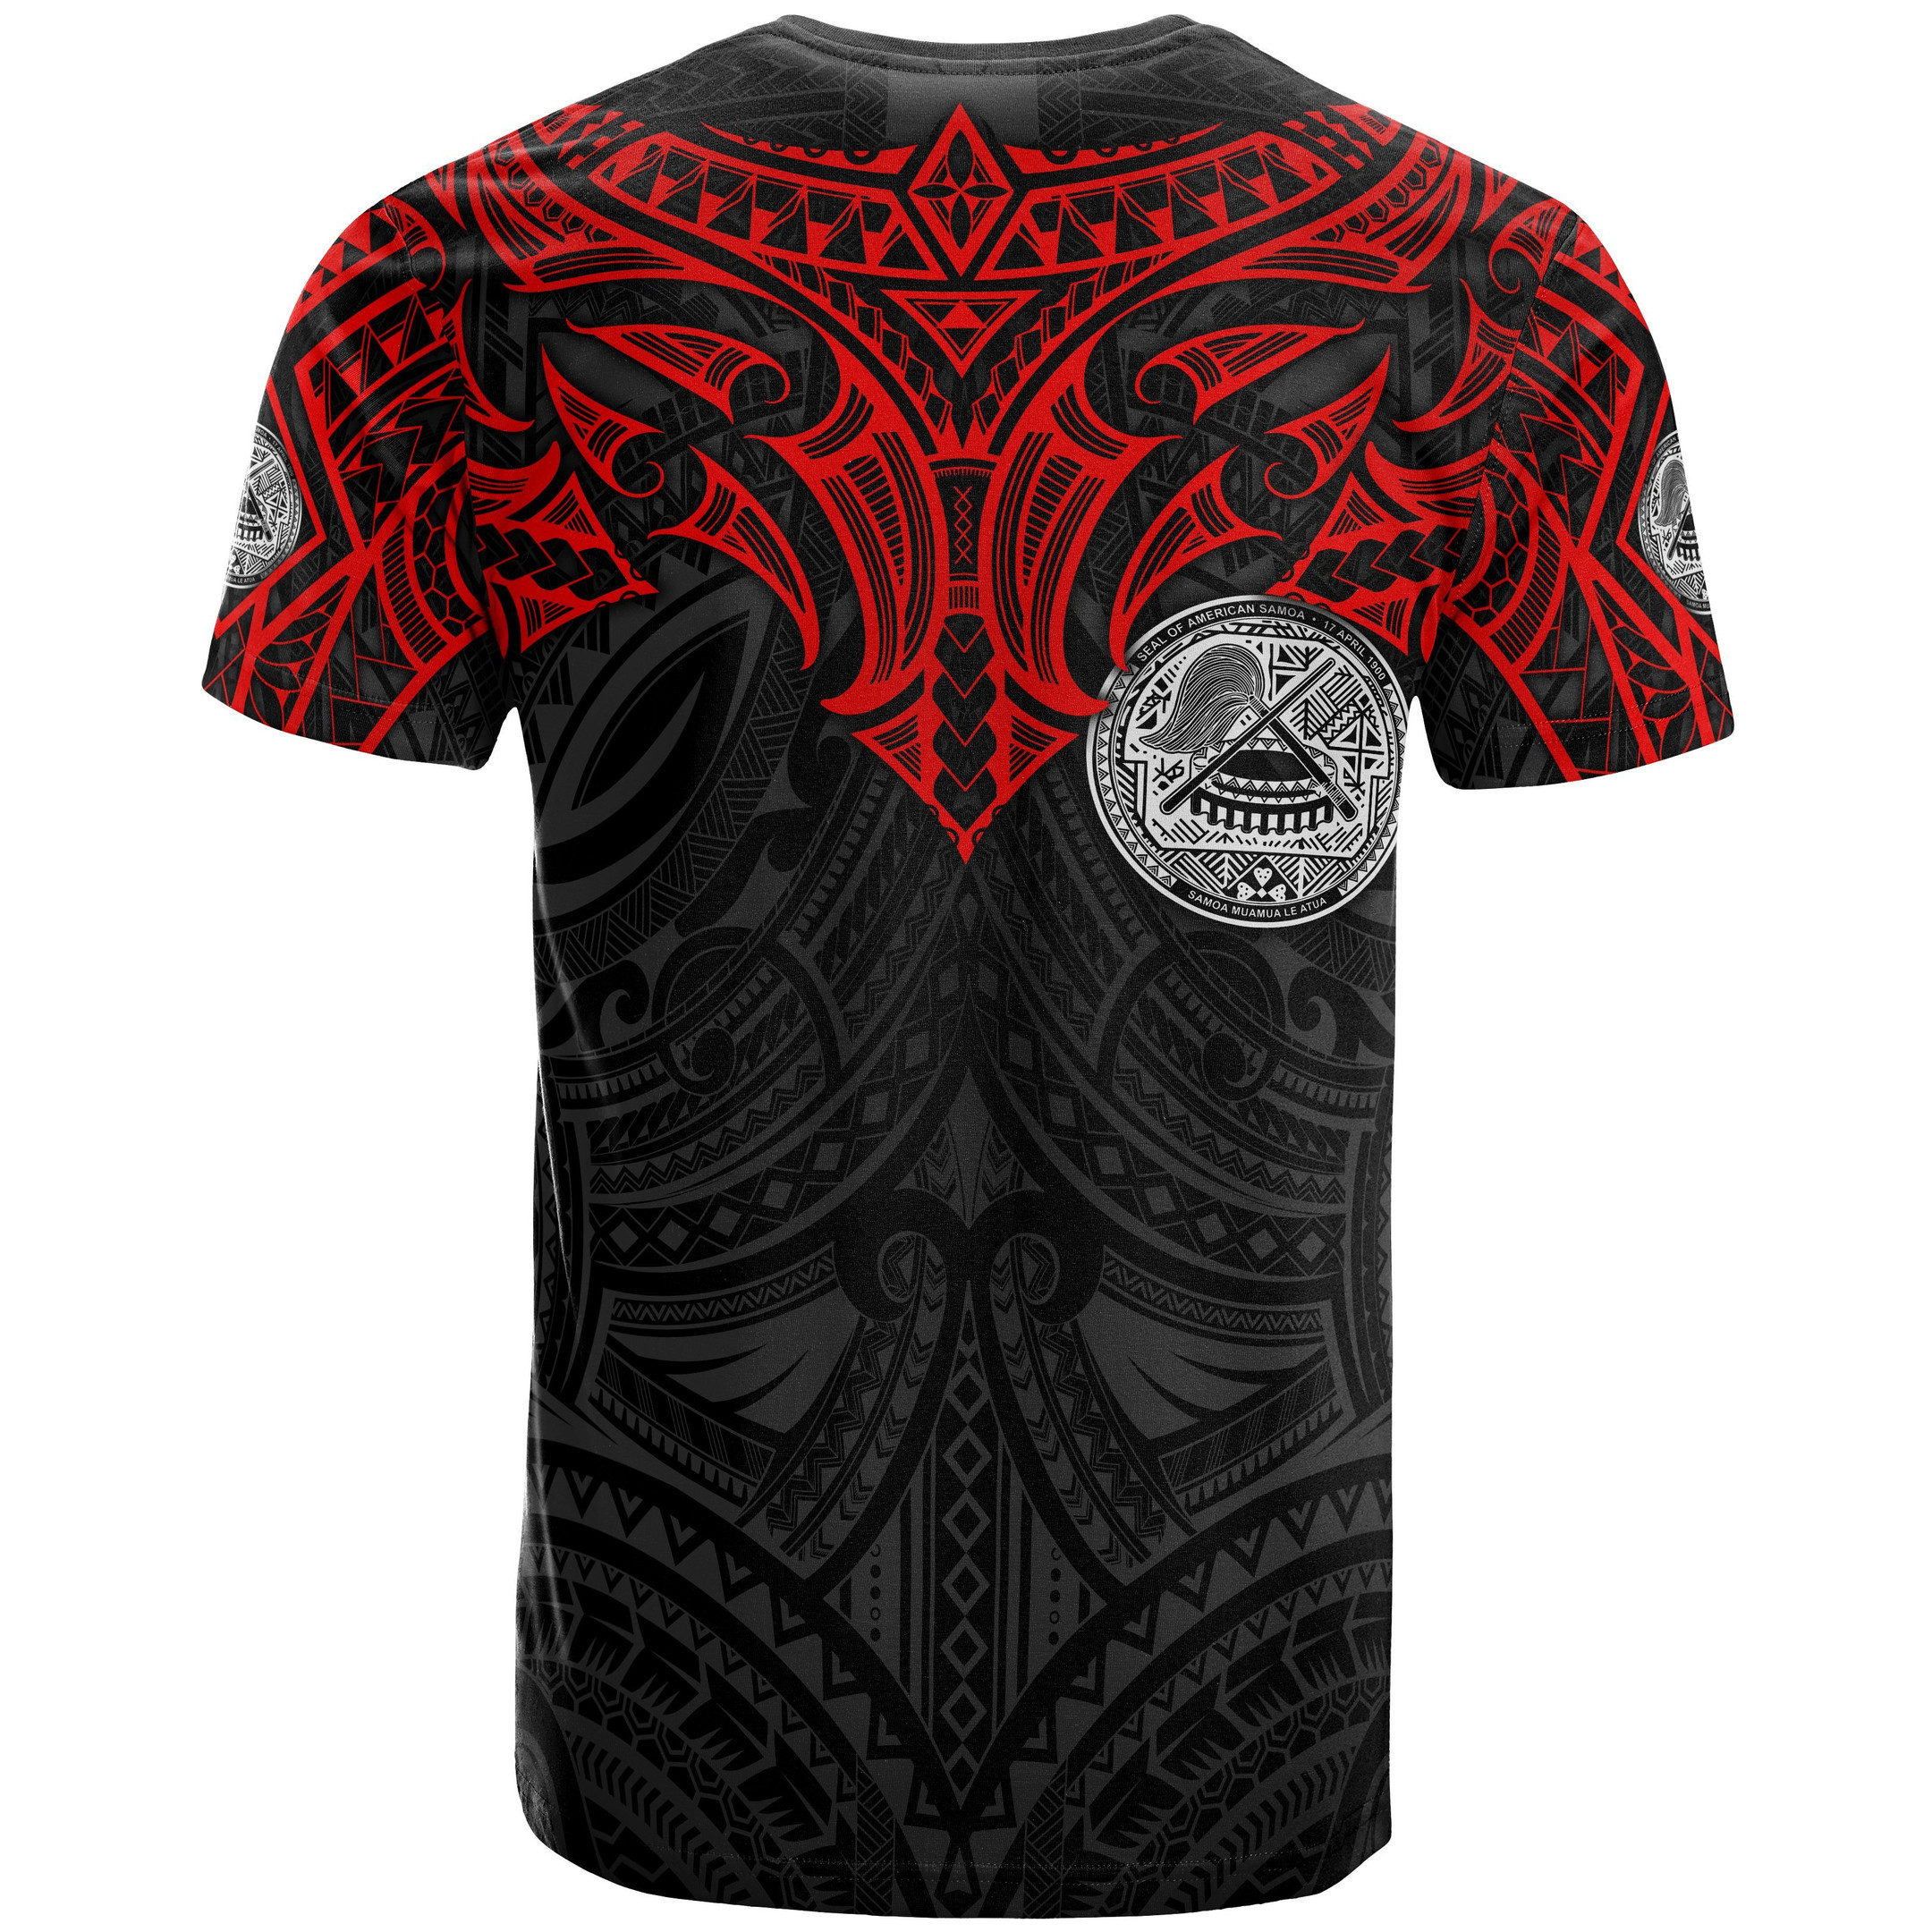 American Samoa Polynesian T-shirt  - Whale Tail